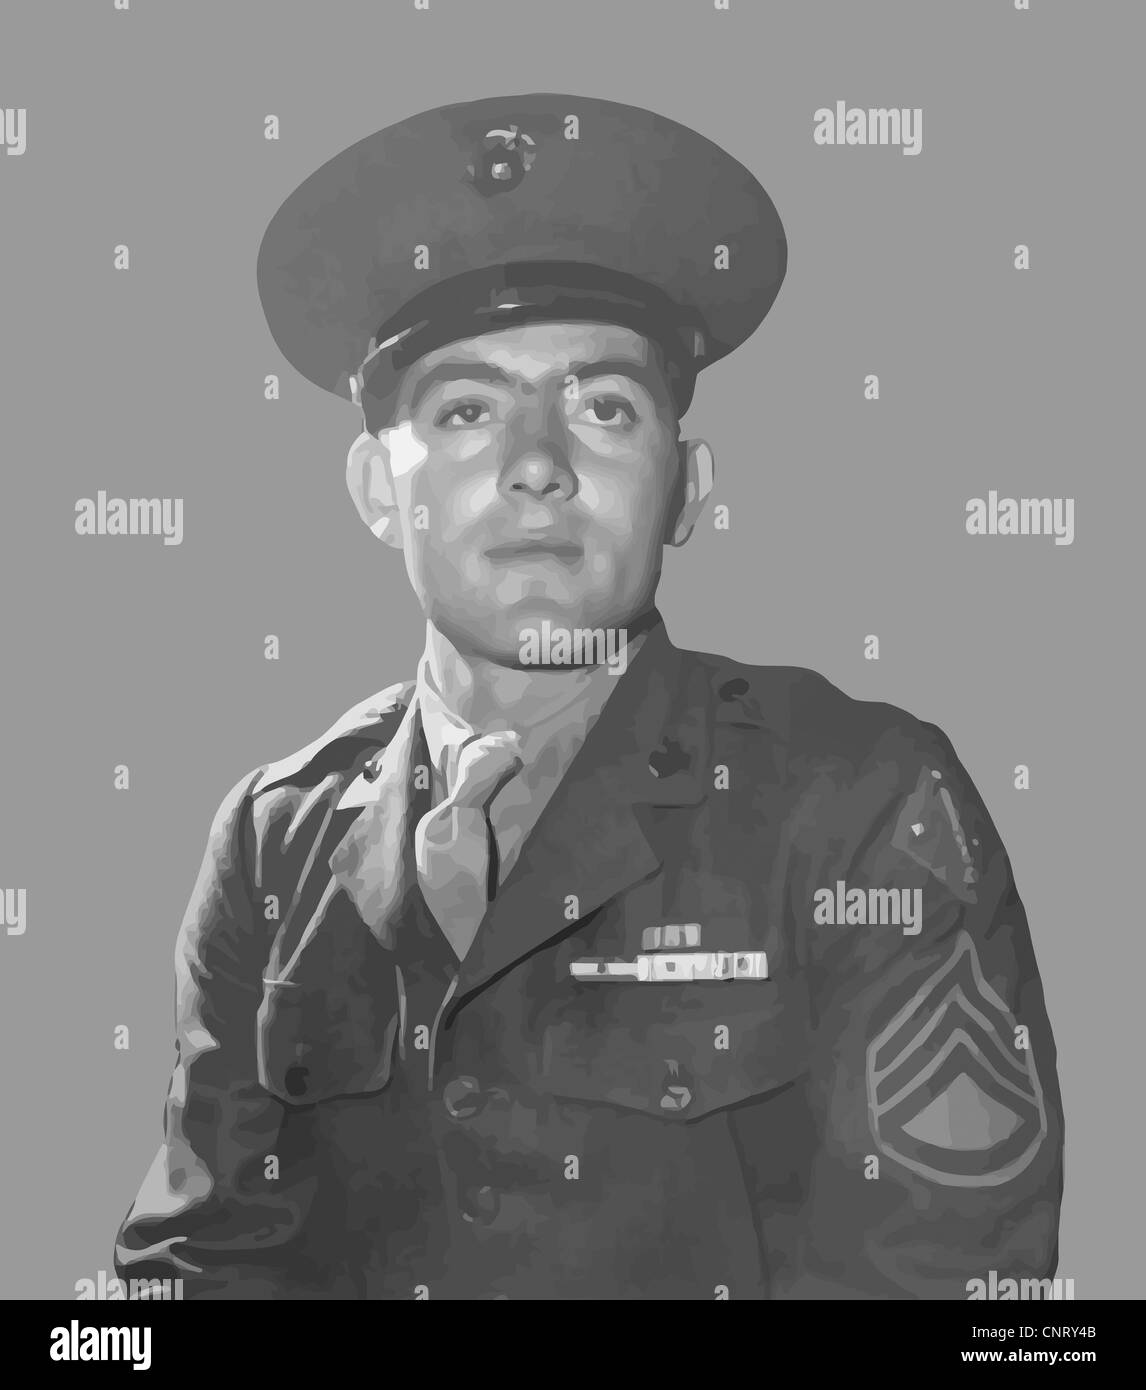 Digitally restored vector portrait of Gunnery Sergeant John Basilone. Stock Photo